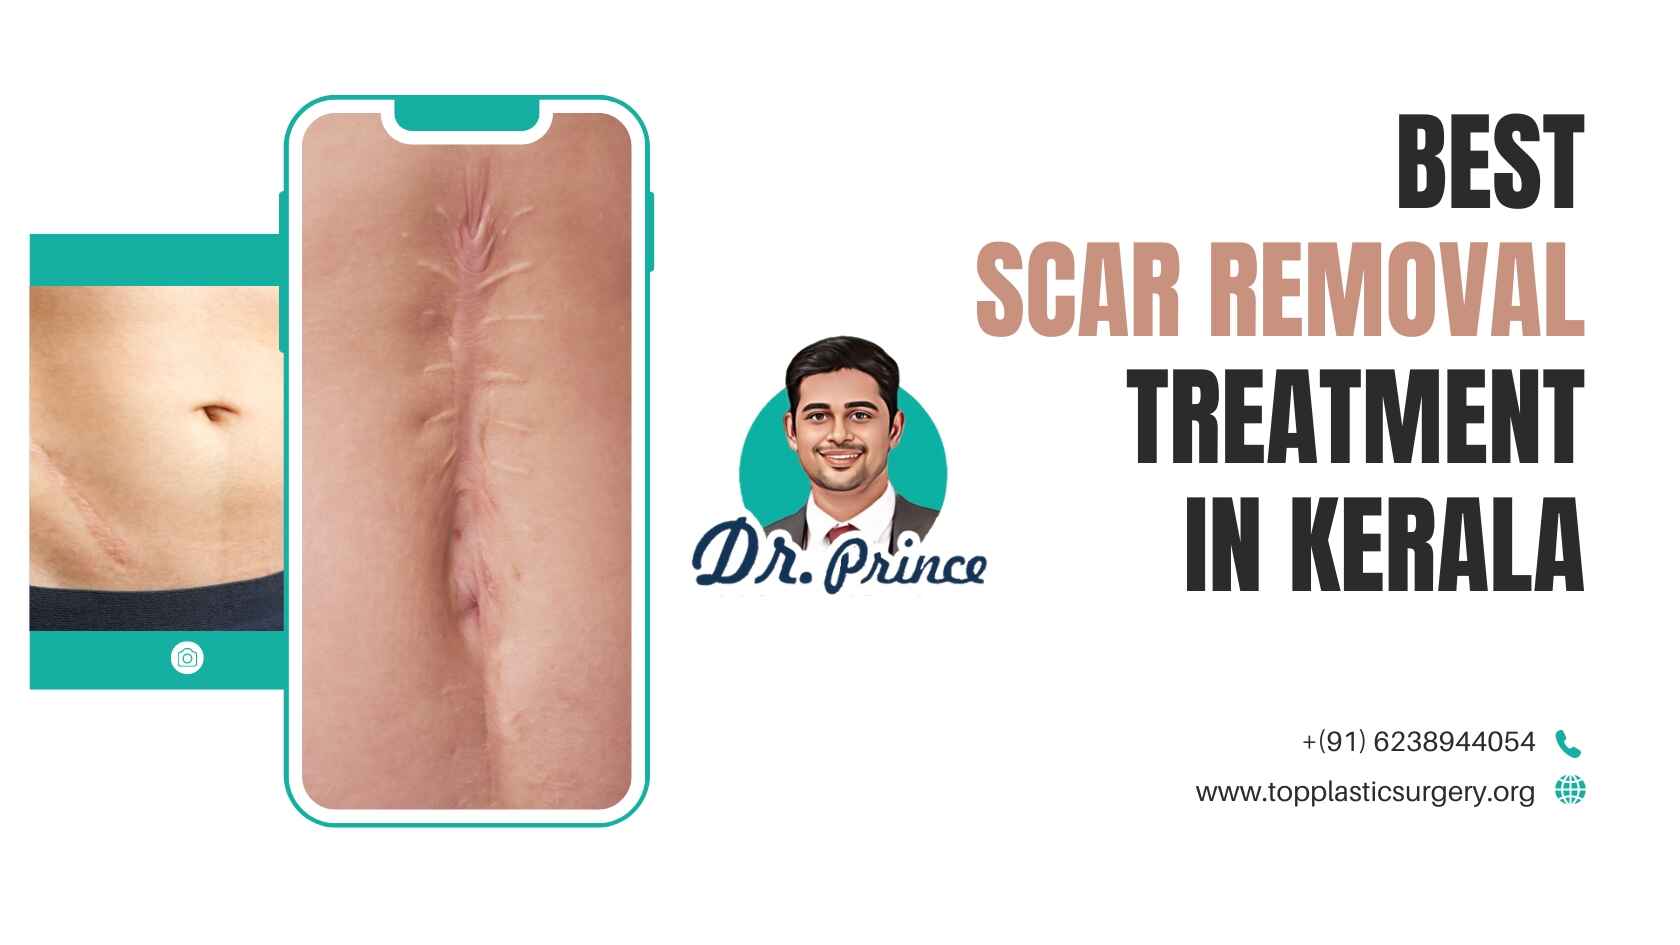 Dr. Prince utilizes advanced techniques for effective scar removal treatments at Elite Hospital, Thrissur.